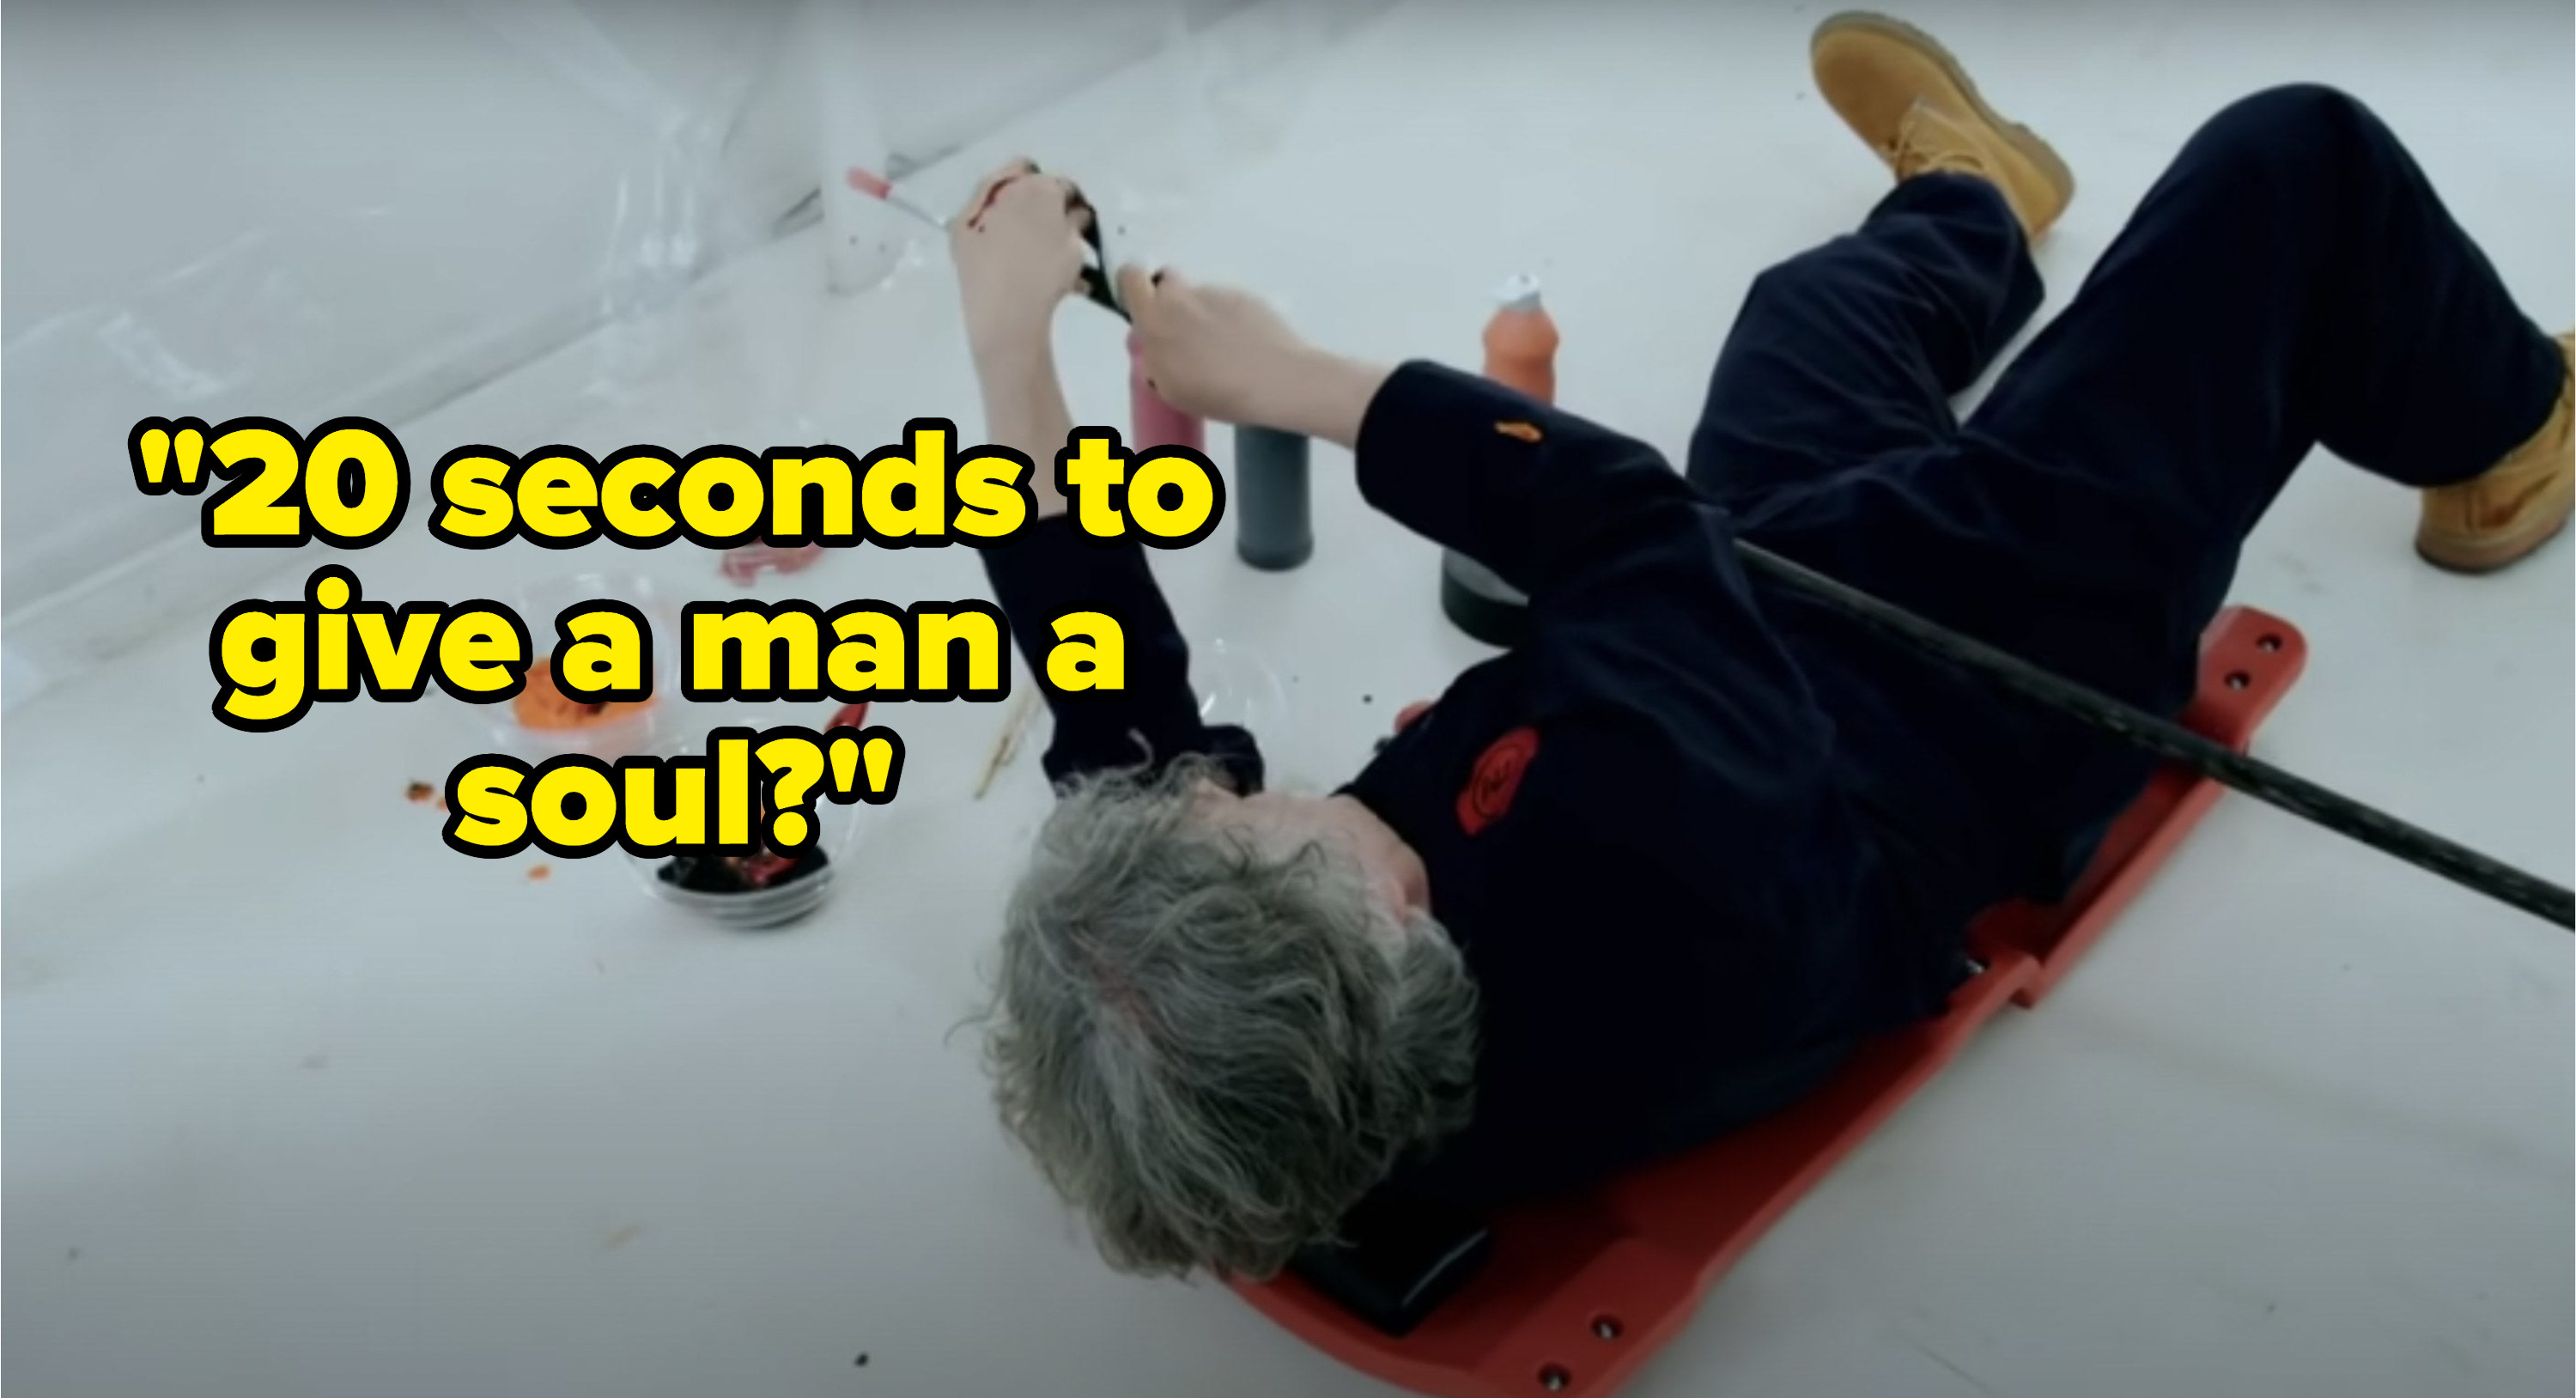 Alan Davies asks, 20 seconds to give a man a soul